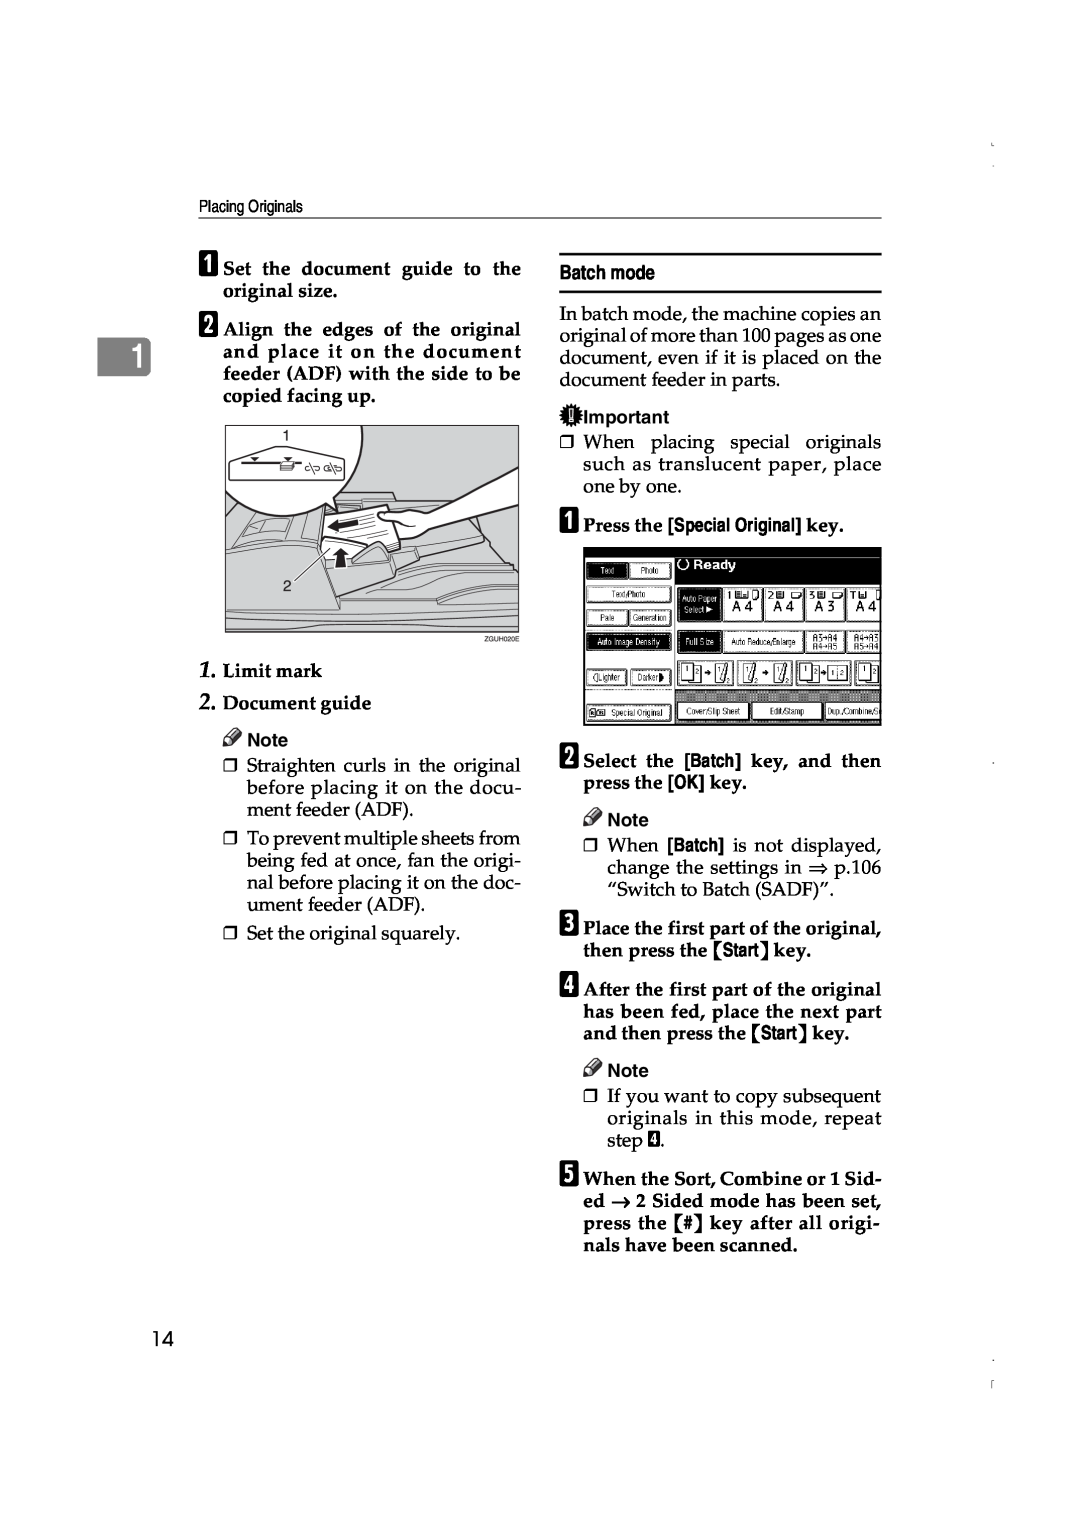 Lanier LD075, LD060 manual Batch mode, A Set the document guide to the original size, B Align the edges of the original 